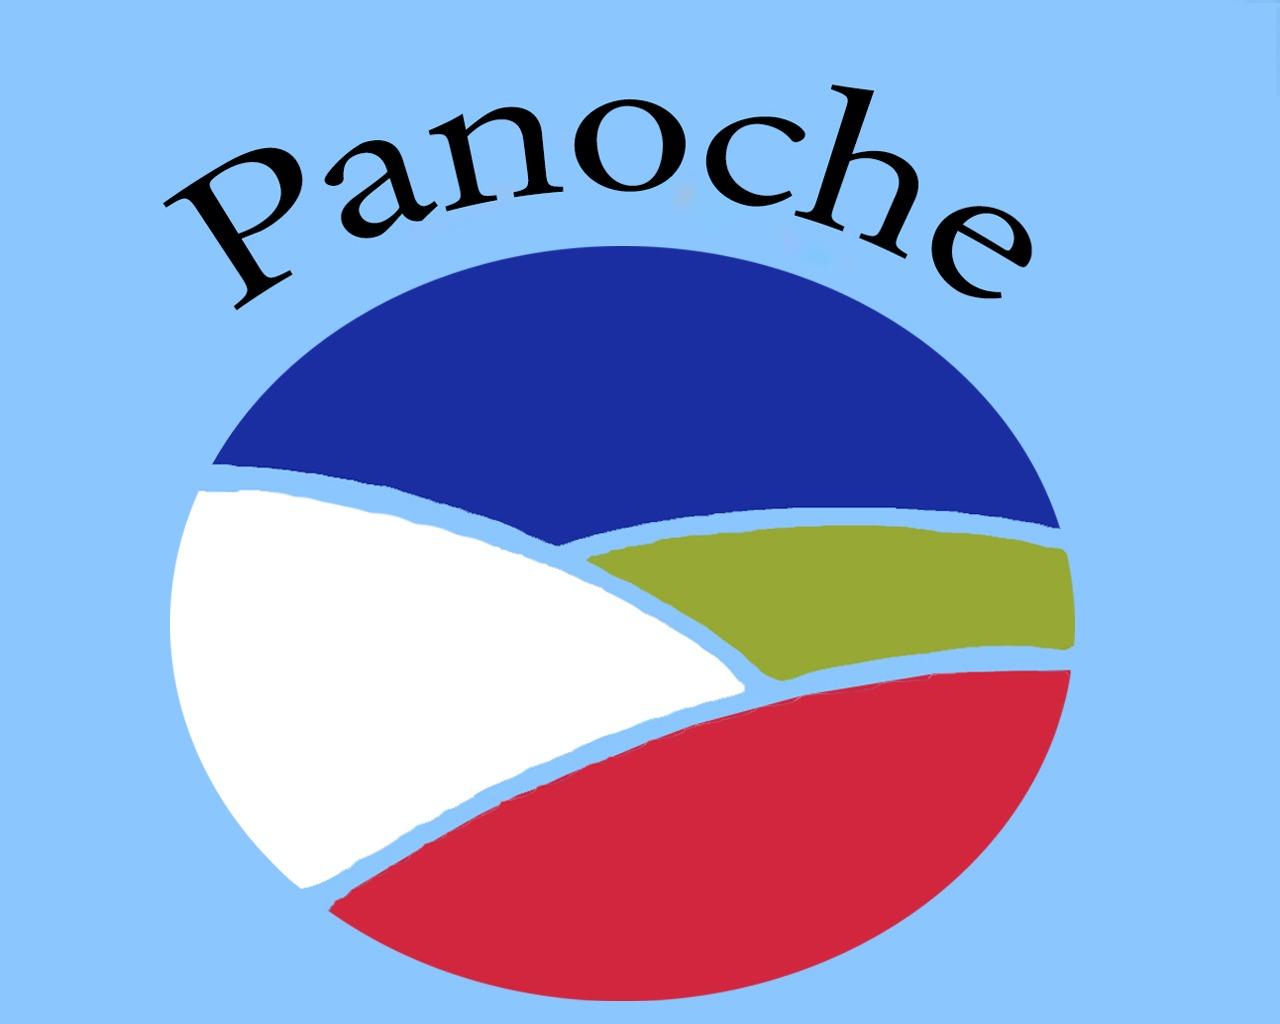 PANOCHE INC.